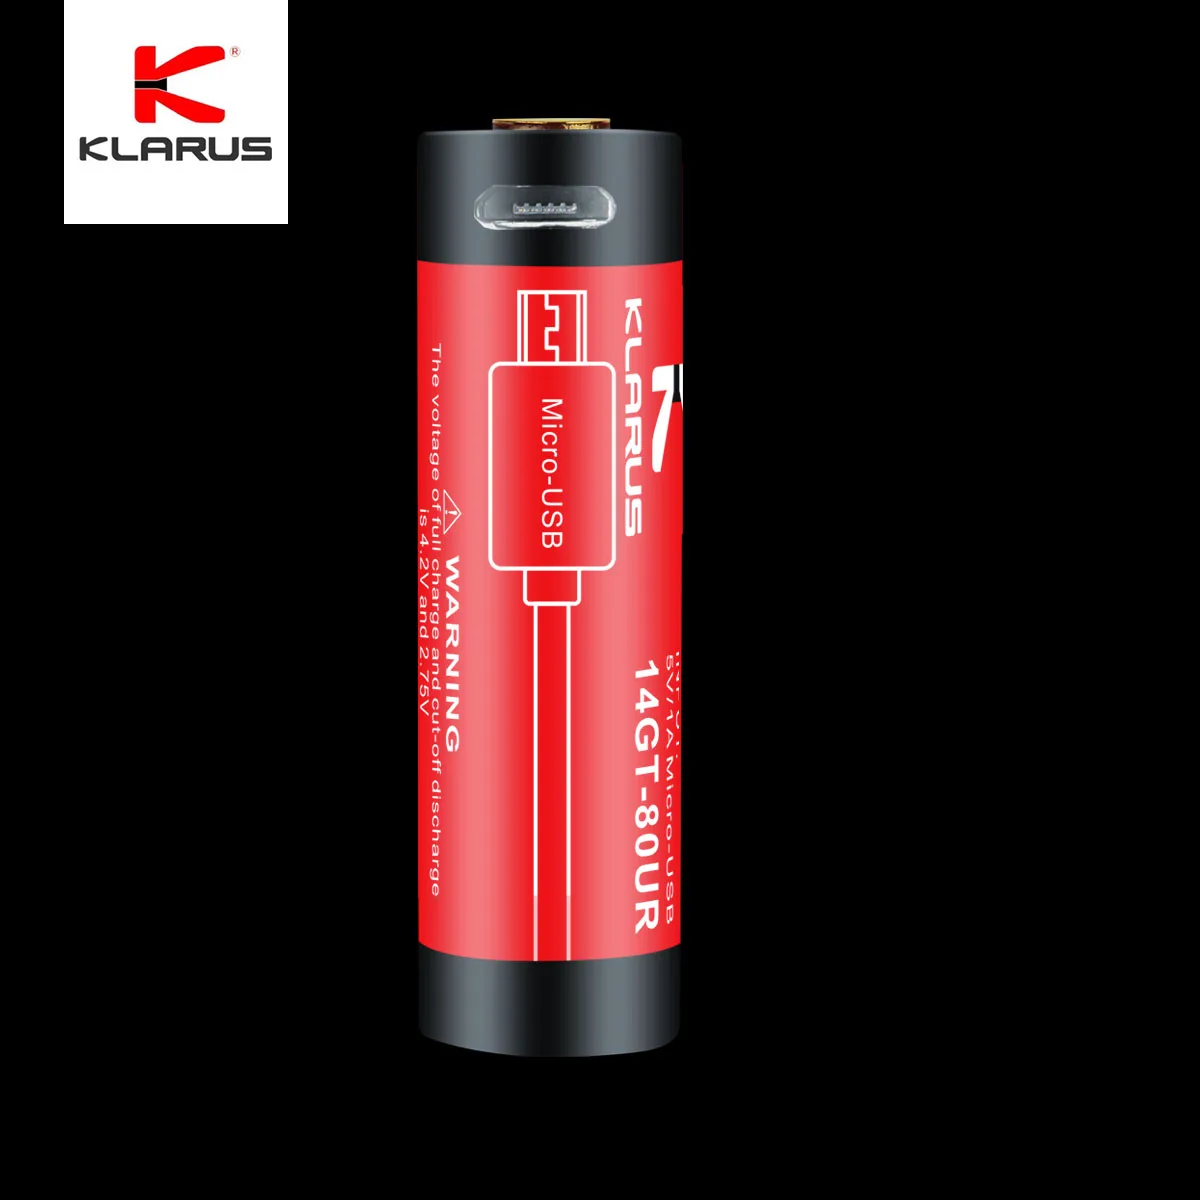 Klarus Original 14500 800mAh Flashlight Li-ion Battery 14GT-80UR, with Micro-USB Charging Port, High Discharge for LED Torch